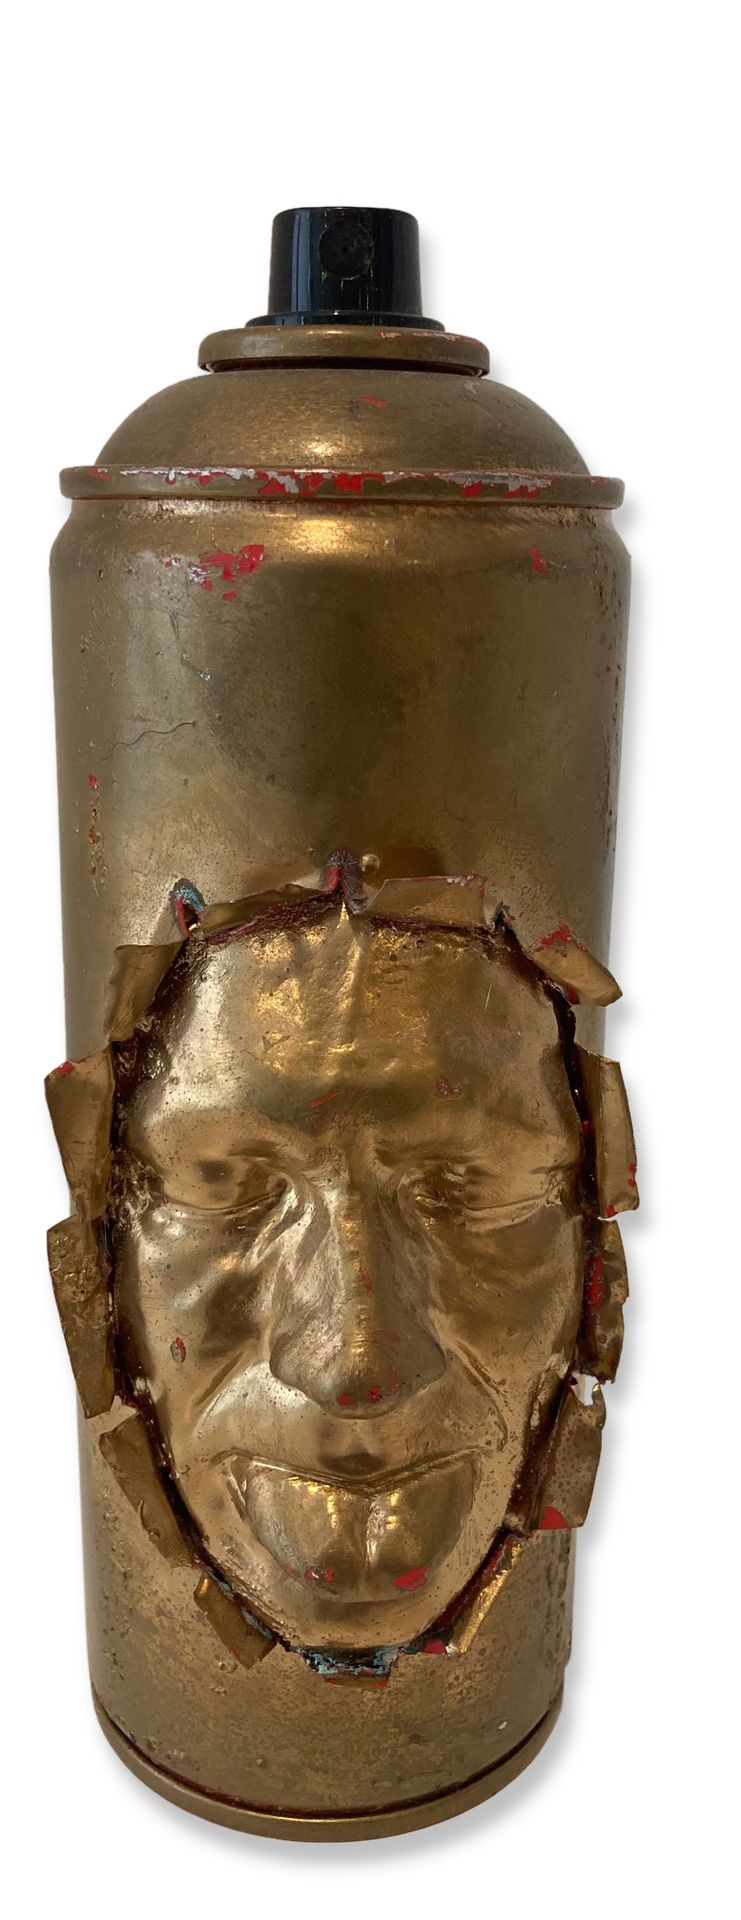 GREGOS (Né en 1972) 用艺术家的脸作画的雕塑生物体
混合媒体：石膏、金属和丙烯酸
高20厘米